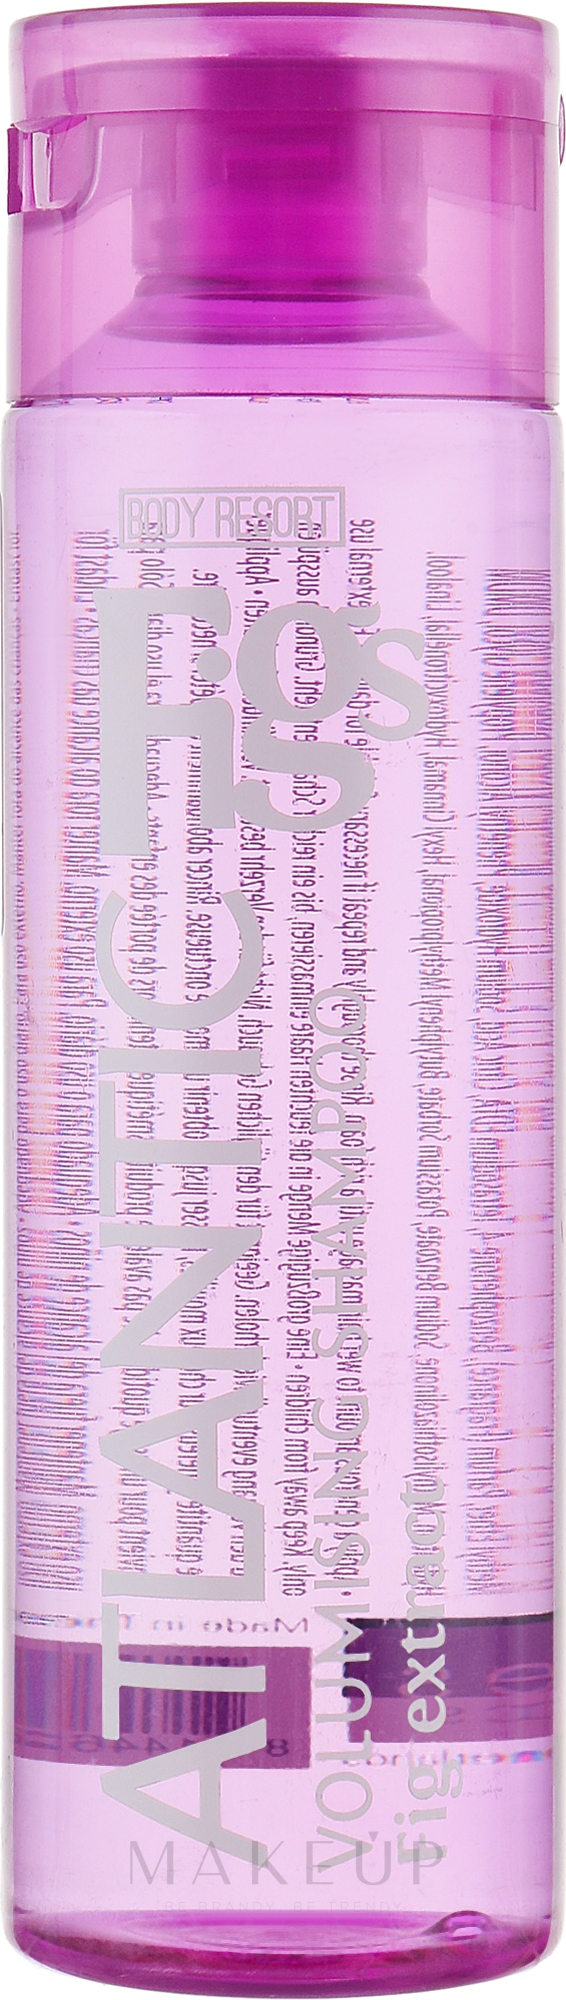 Haarshampoo mit Feigenextrakt - Mades Cosmetics Body Resort Atlantic Shampoo Figs Extract — Foto 250 ml